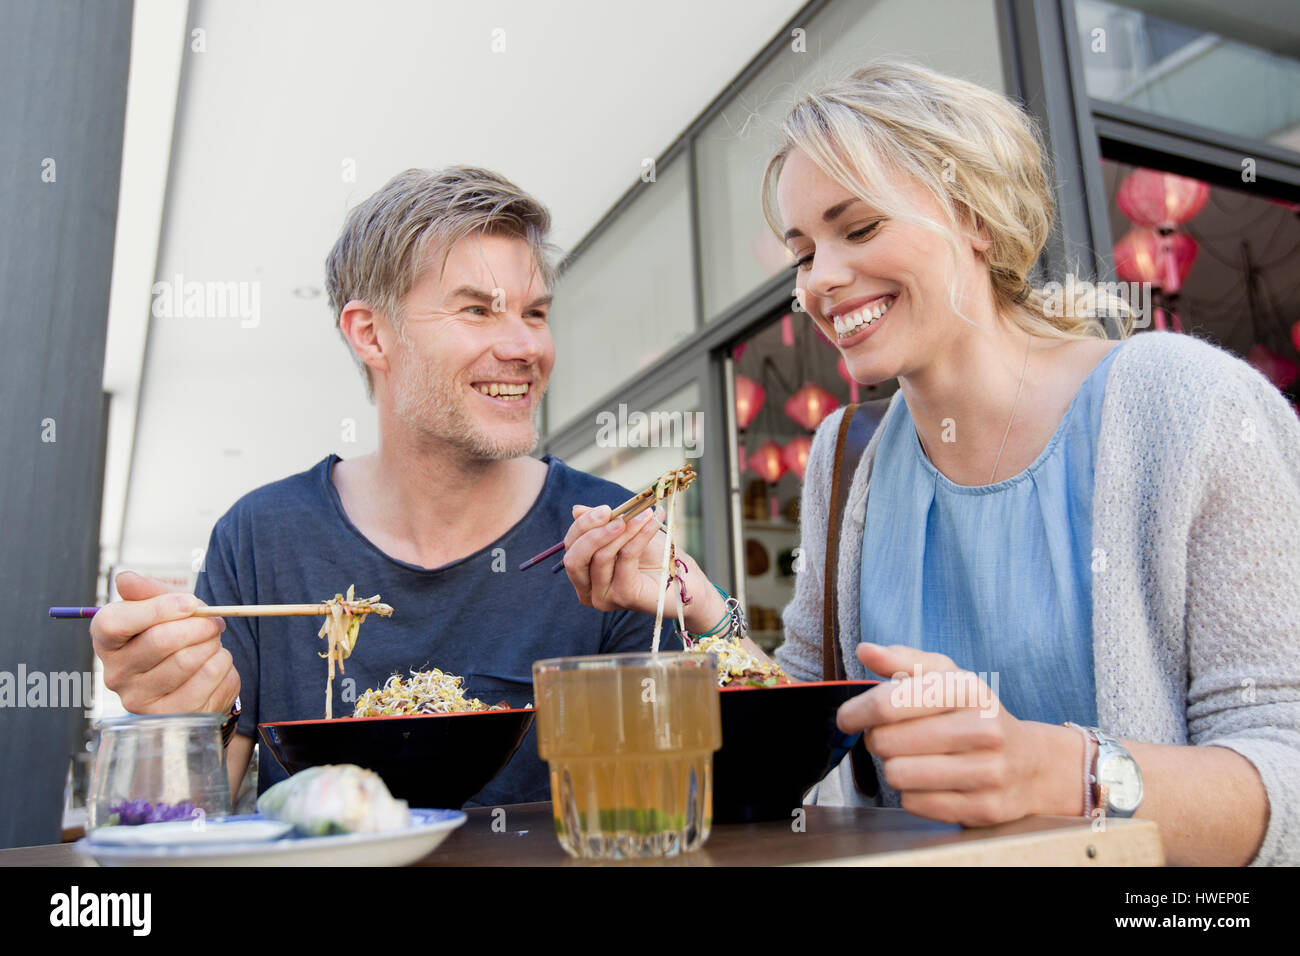 Couple eating noodles at city sidewalk cafe Stock Photo